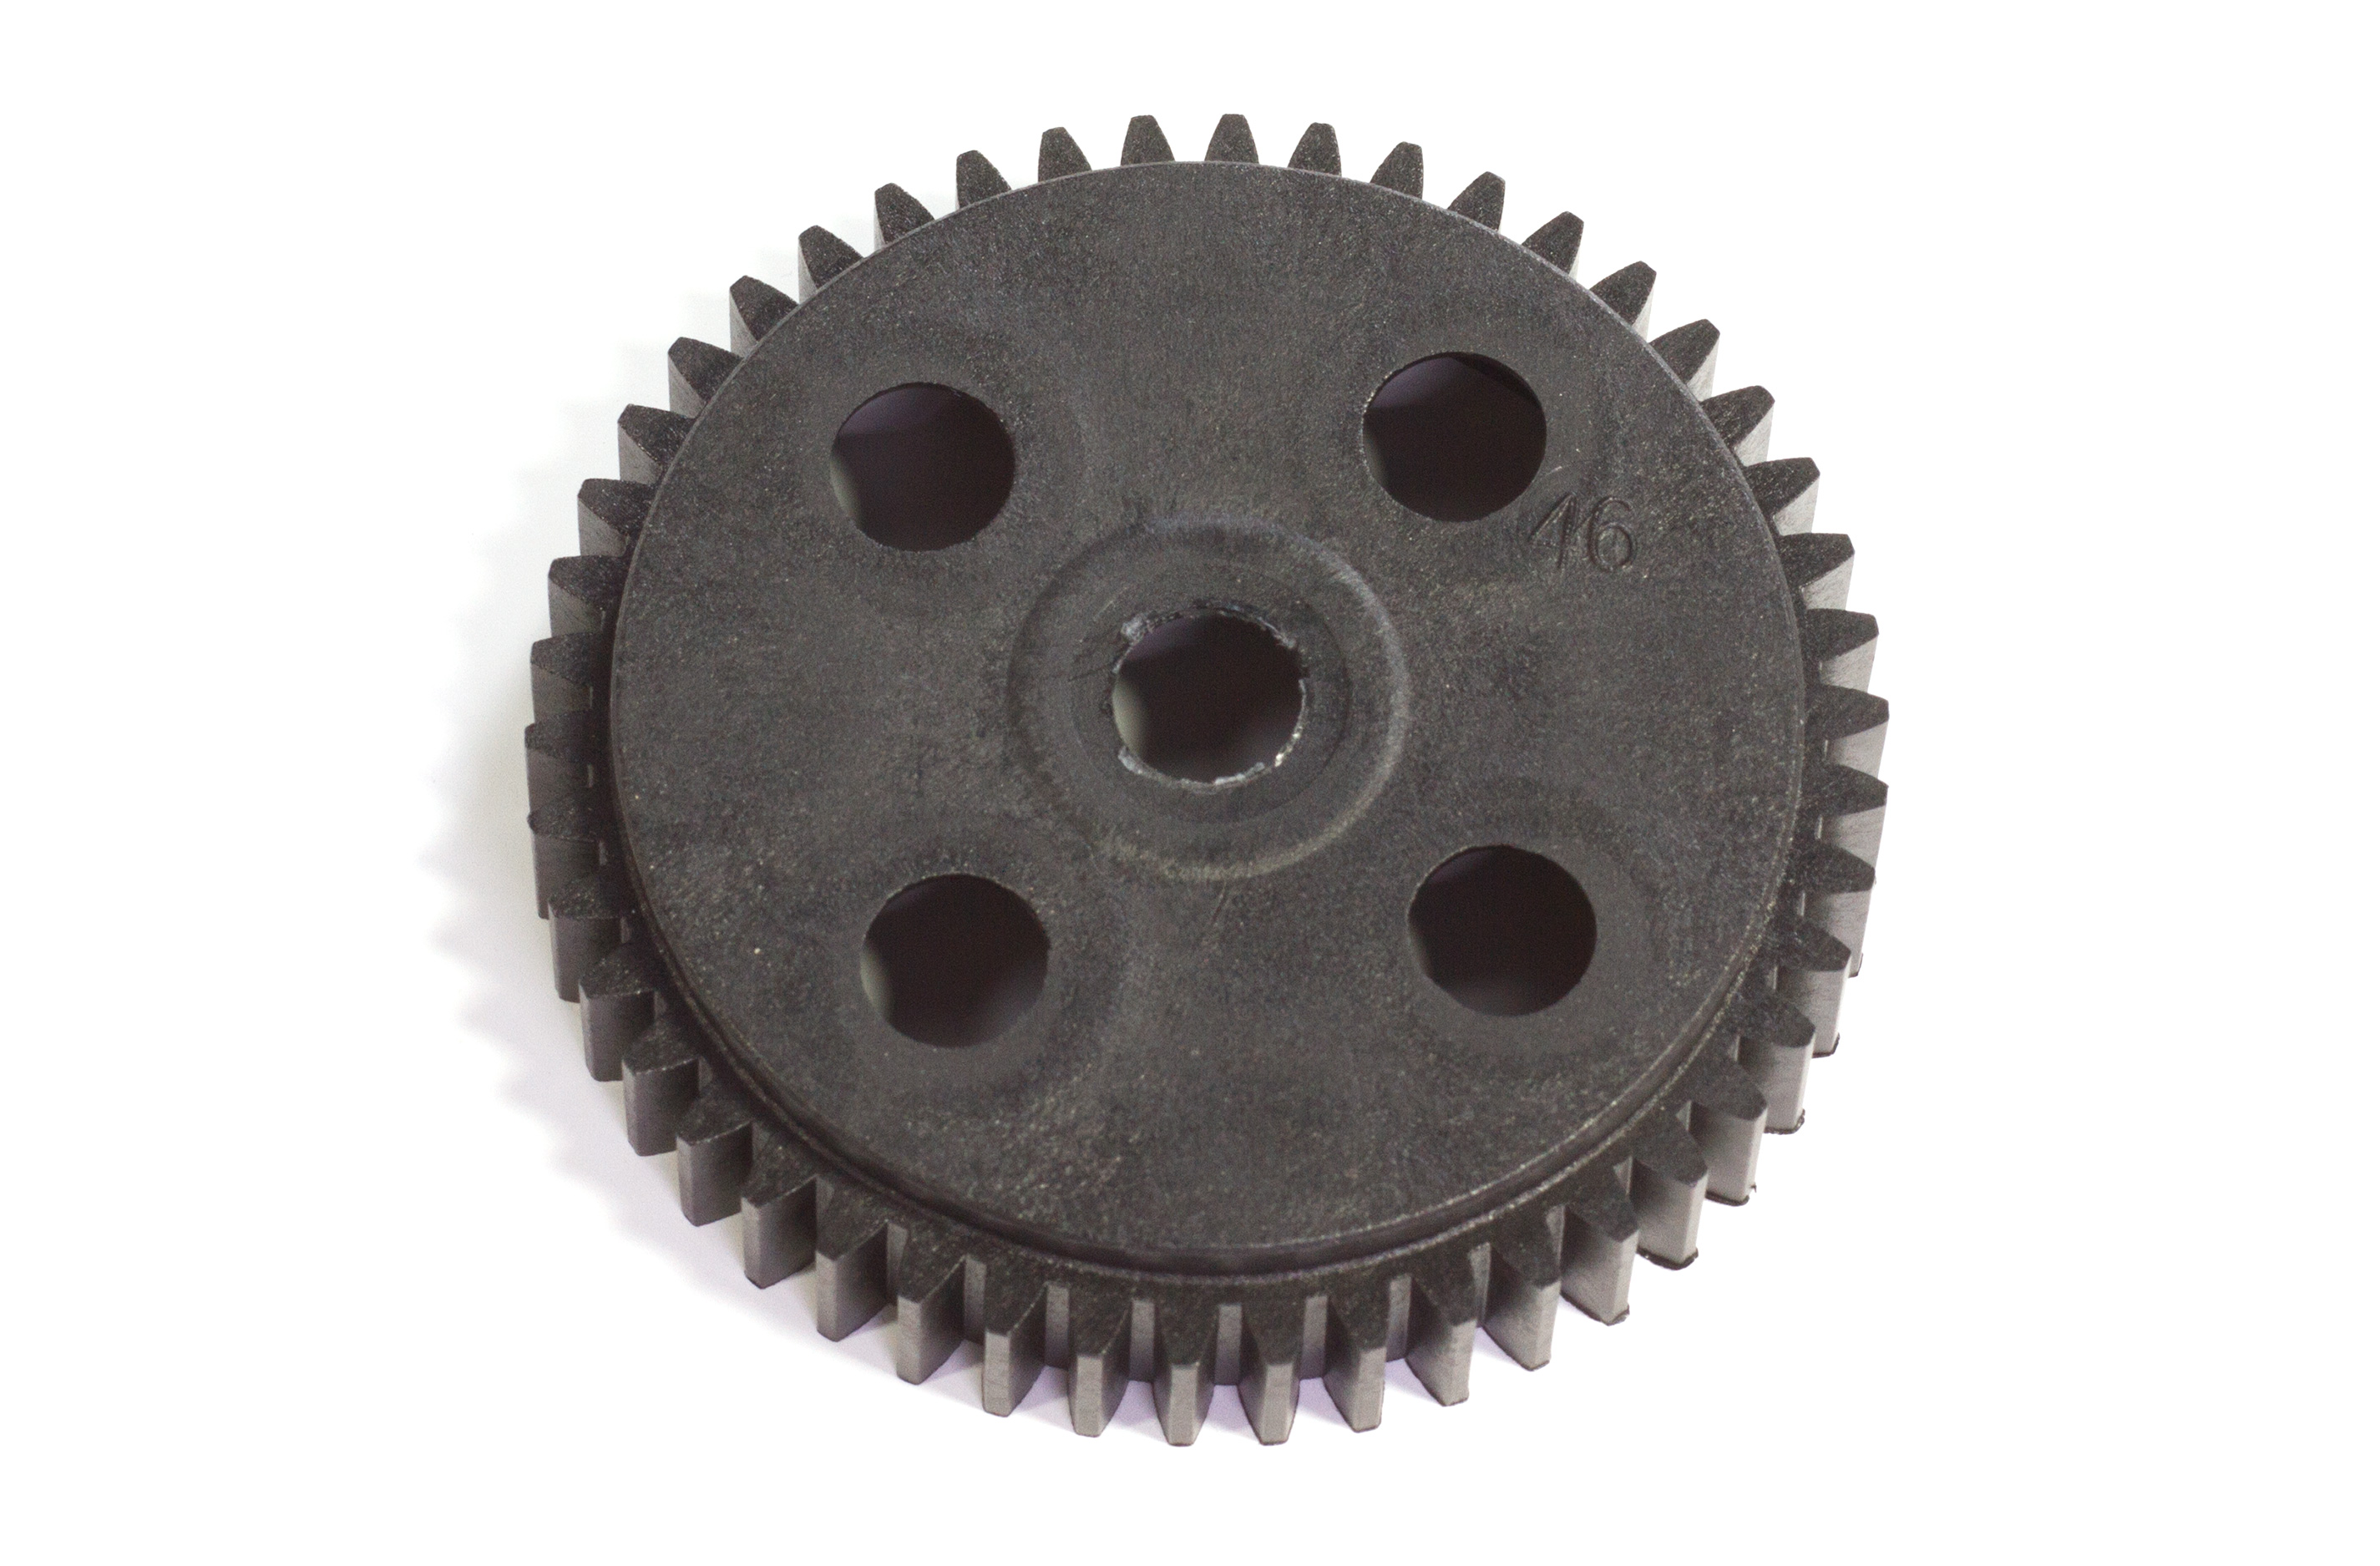 6427 FG Plastic gear wheel 46 teeth - 1pce.